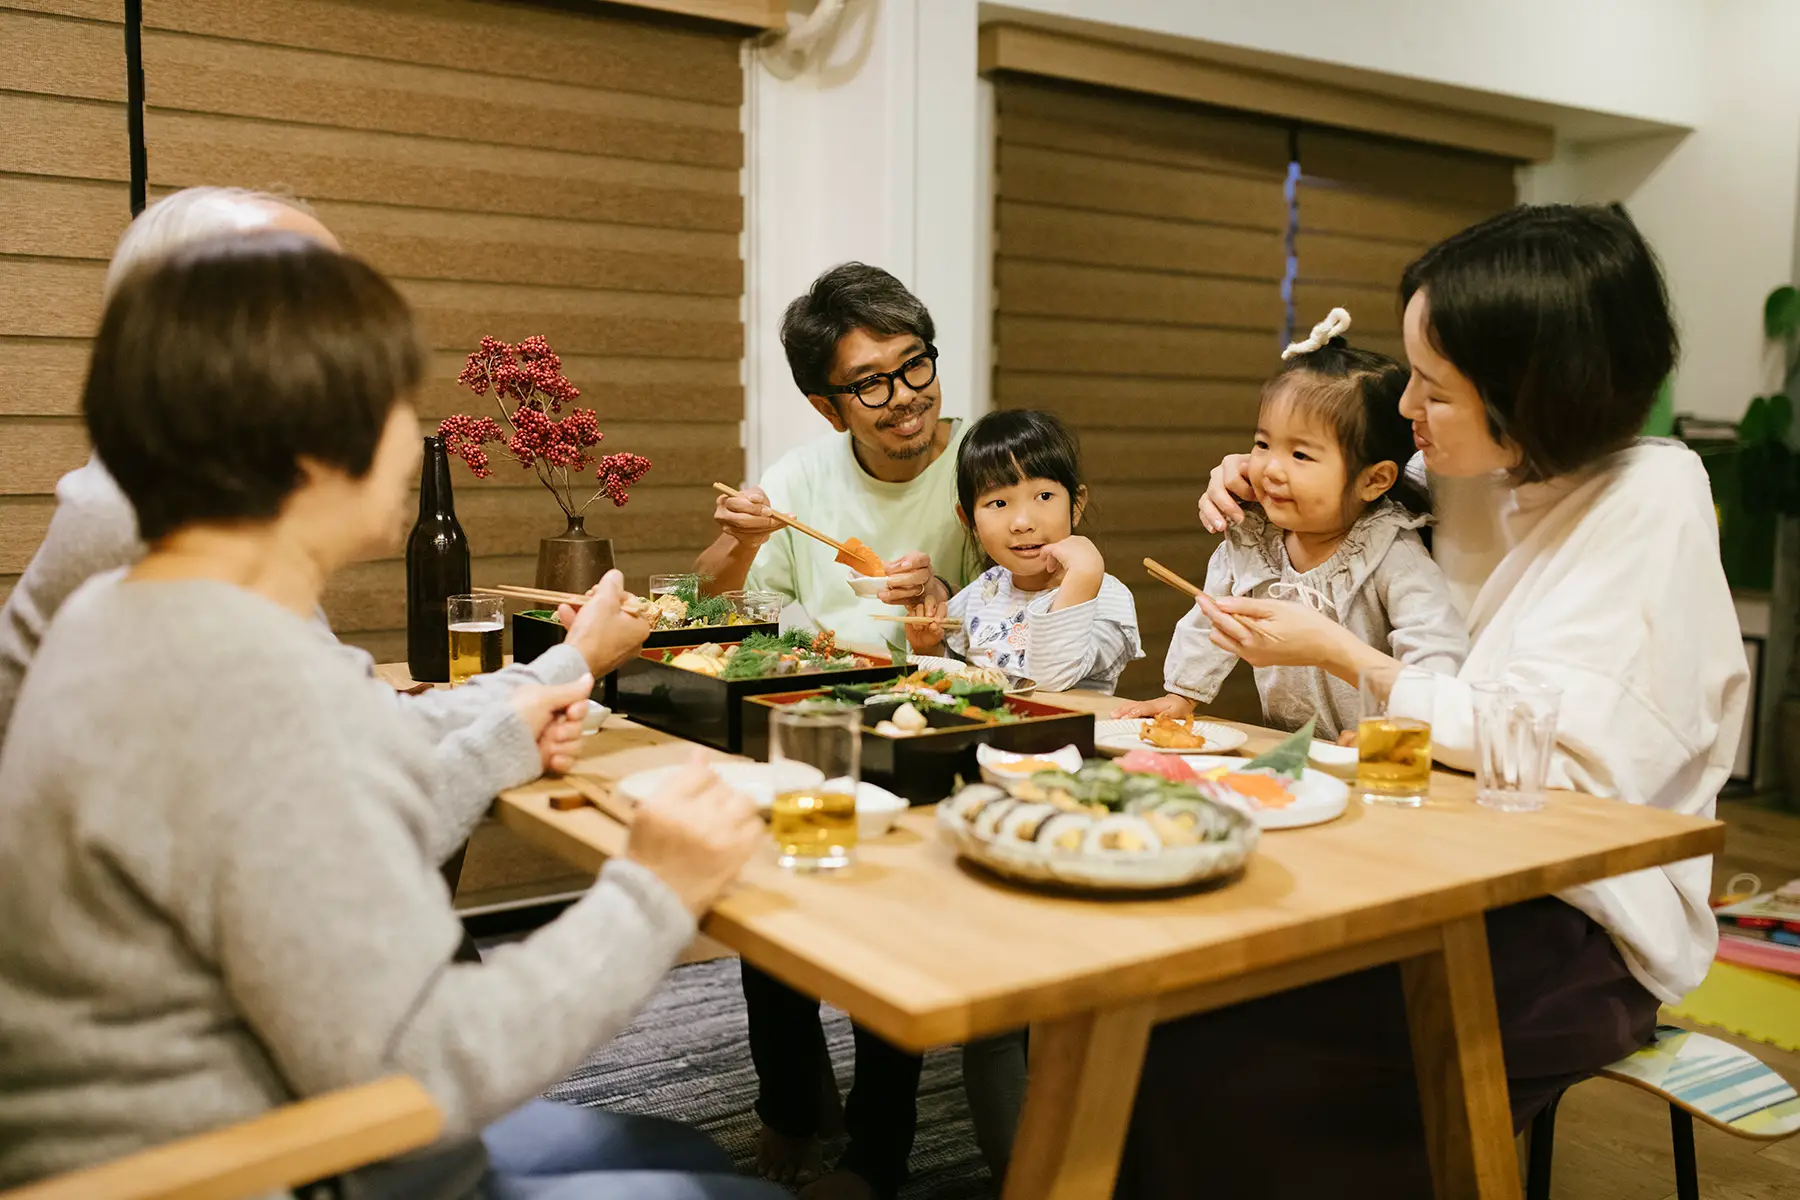 A family enjoying a celebratory meal